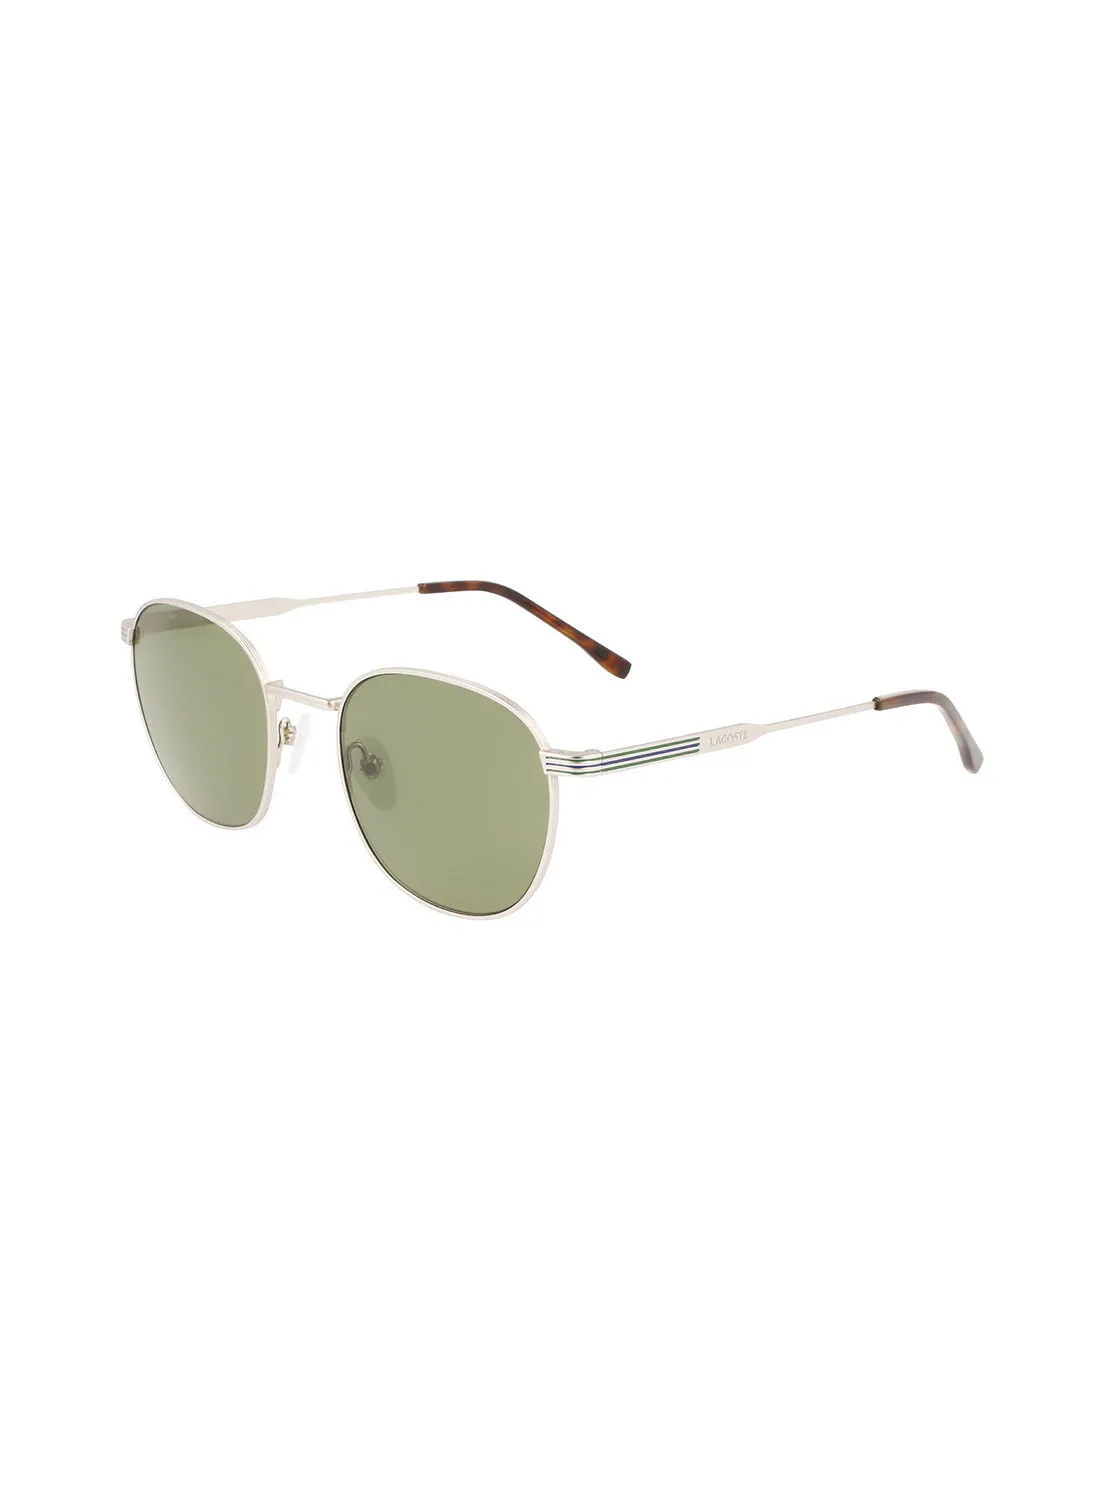 LACOSTE Full Rim Metal Oval Sunglasses L251S 5220 (040)